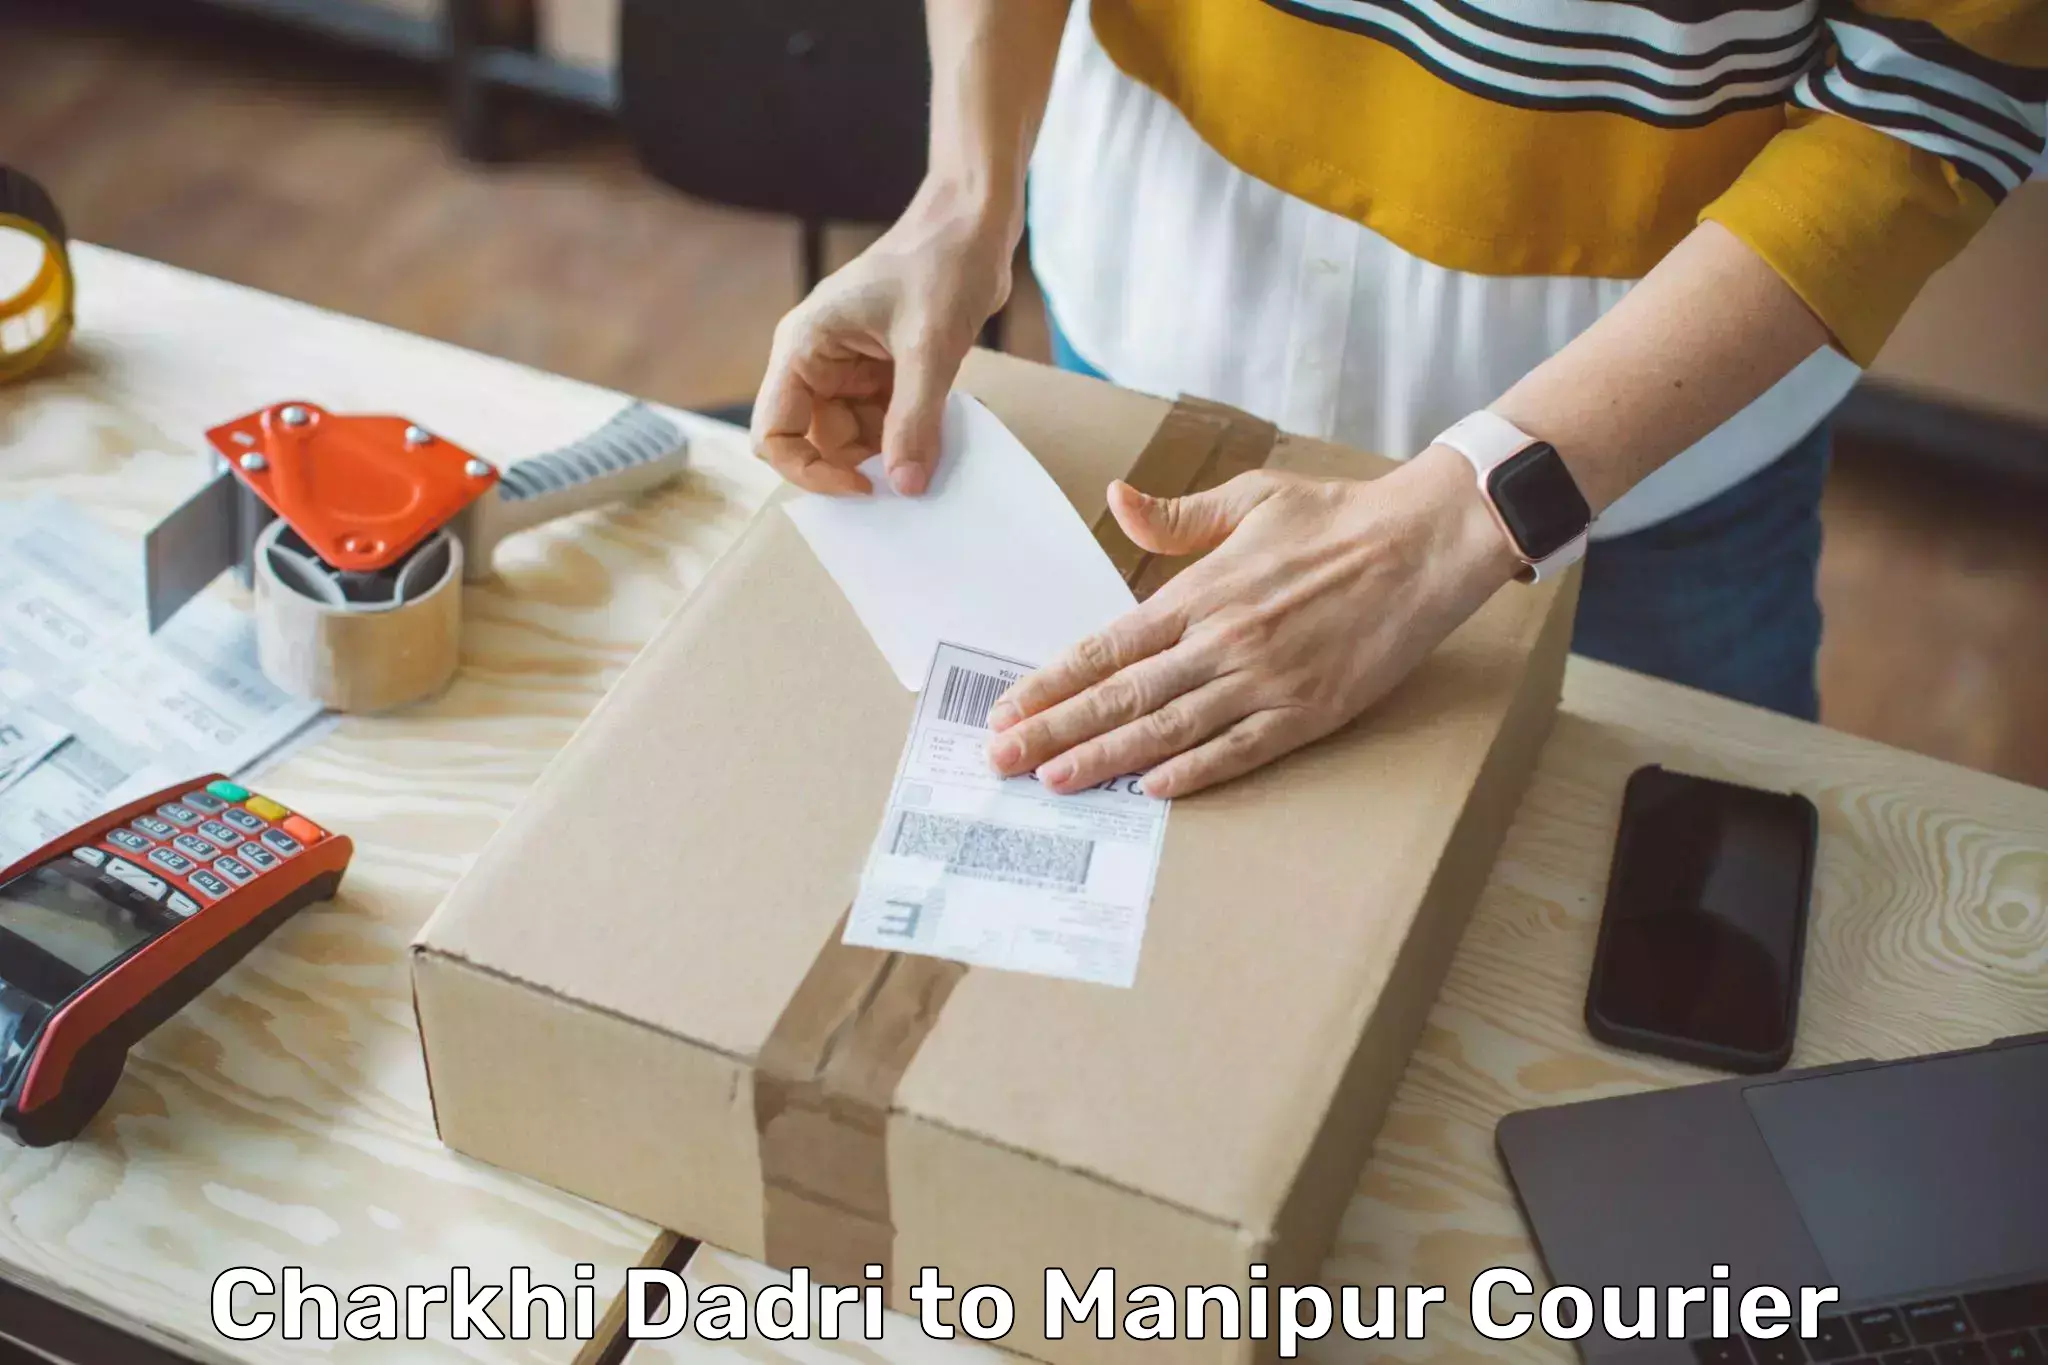 High-speed parcel service Charkhi Dadri to Manipur